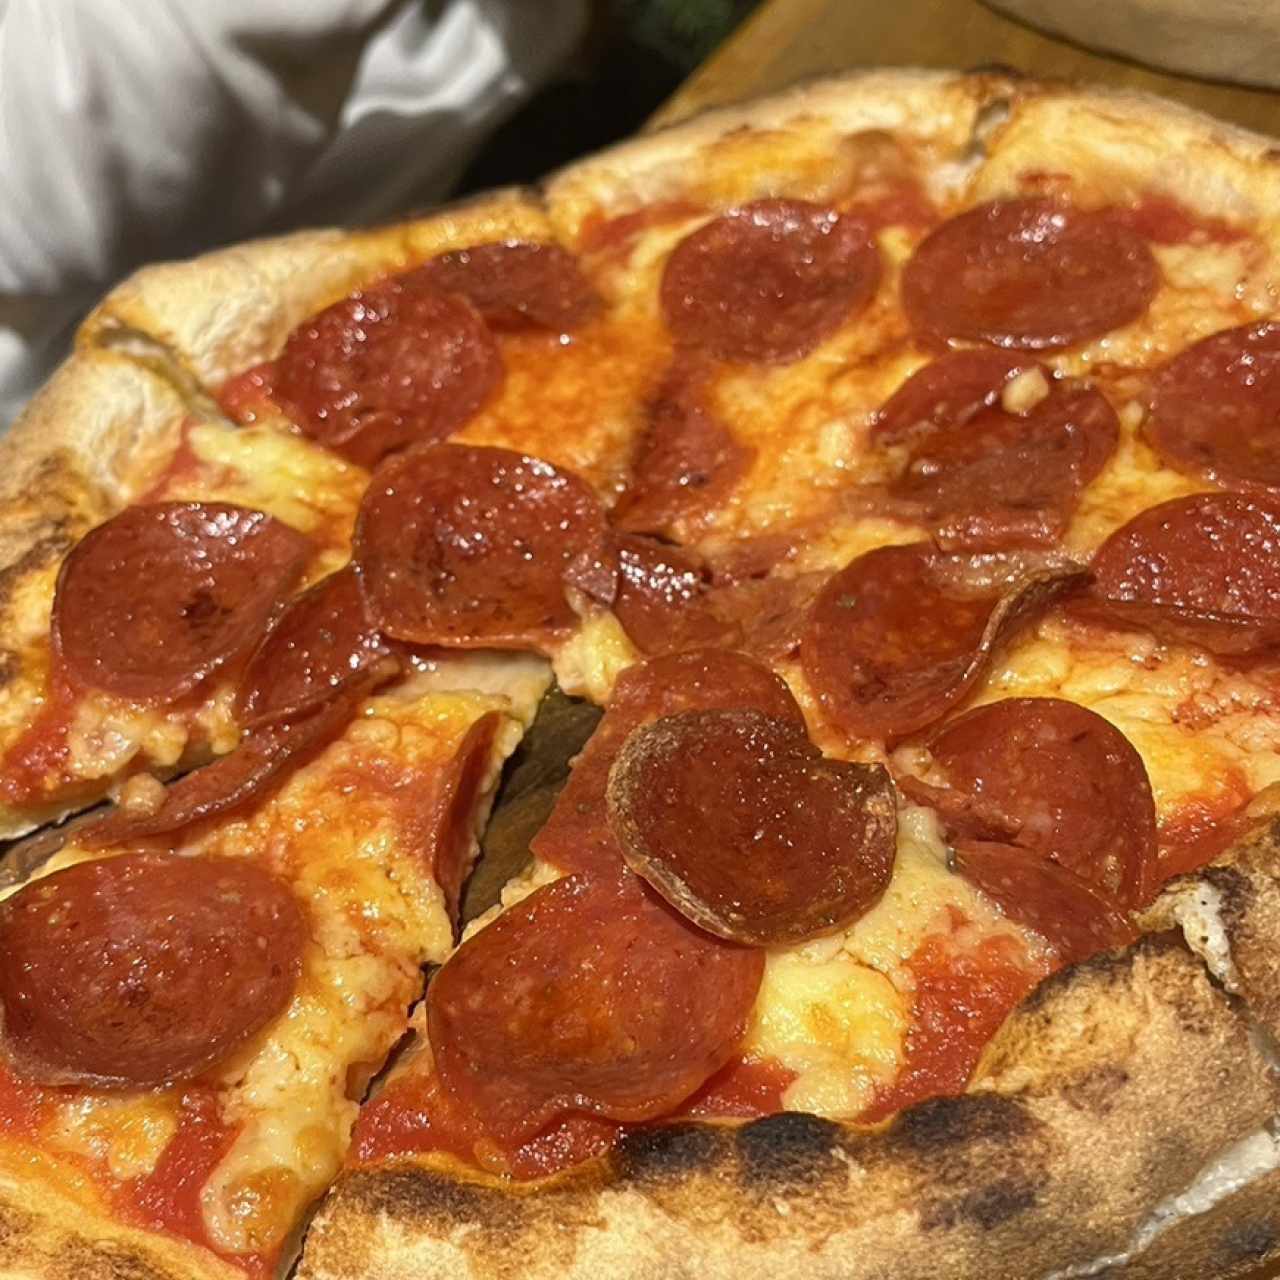 Pizza Napoletana - Pepperoni